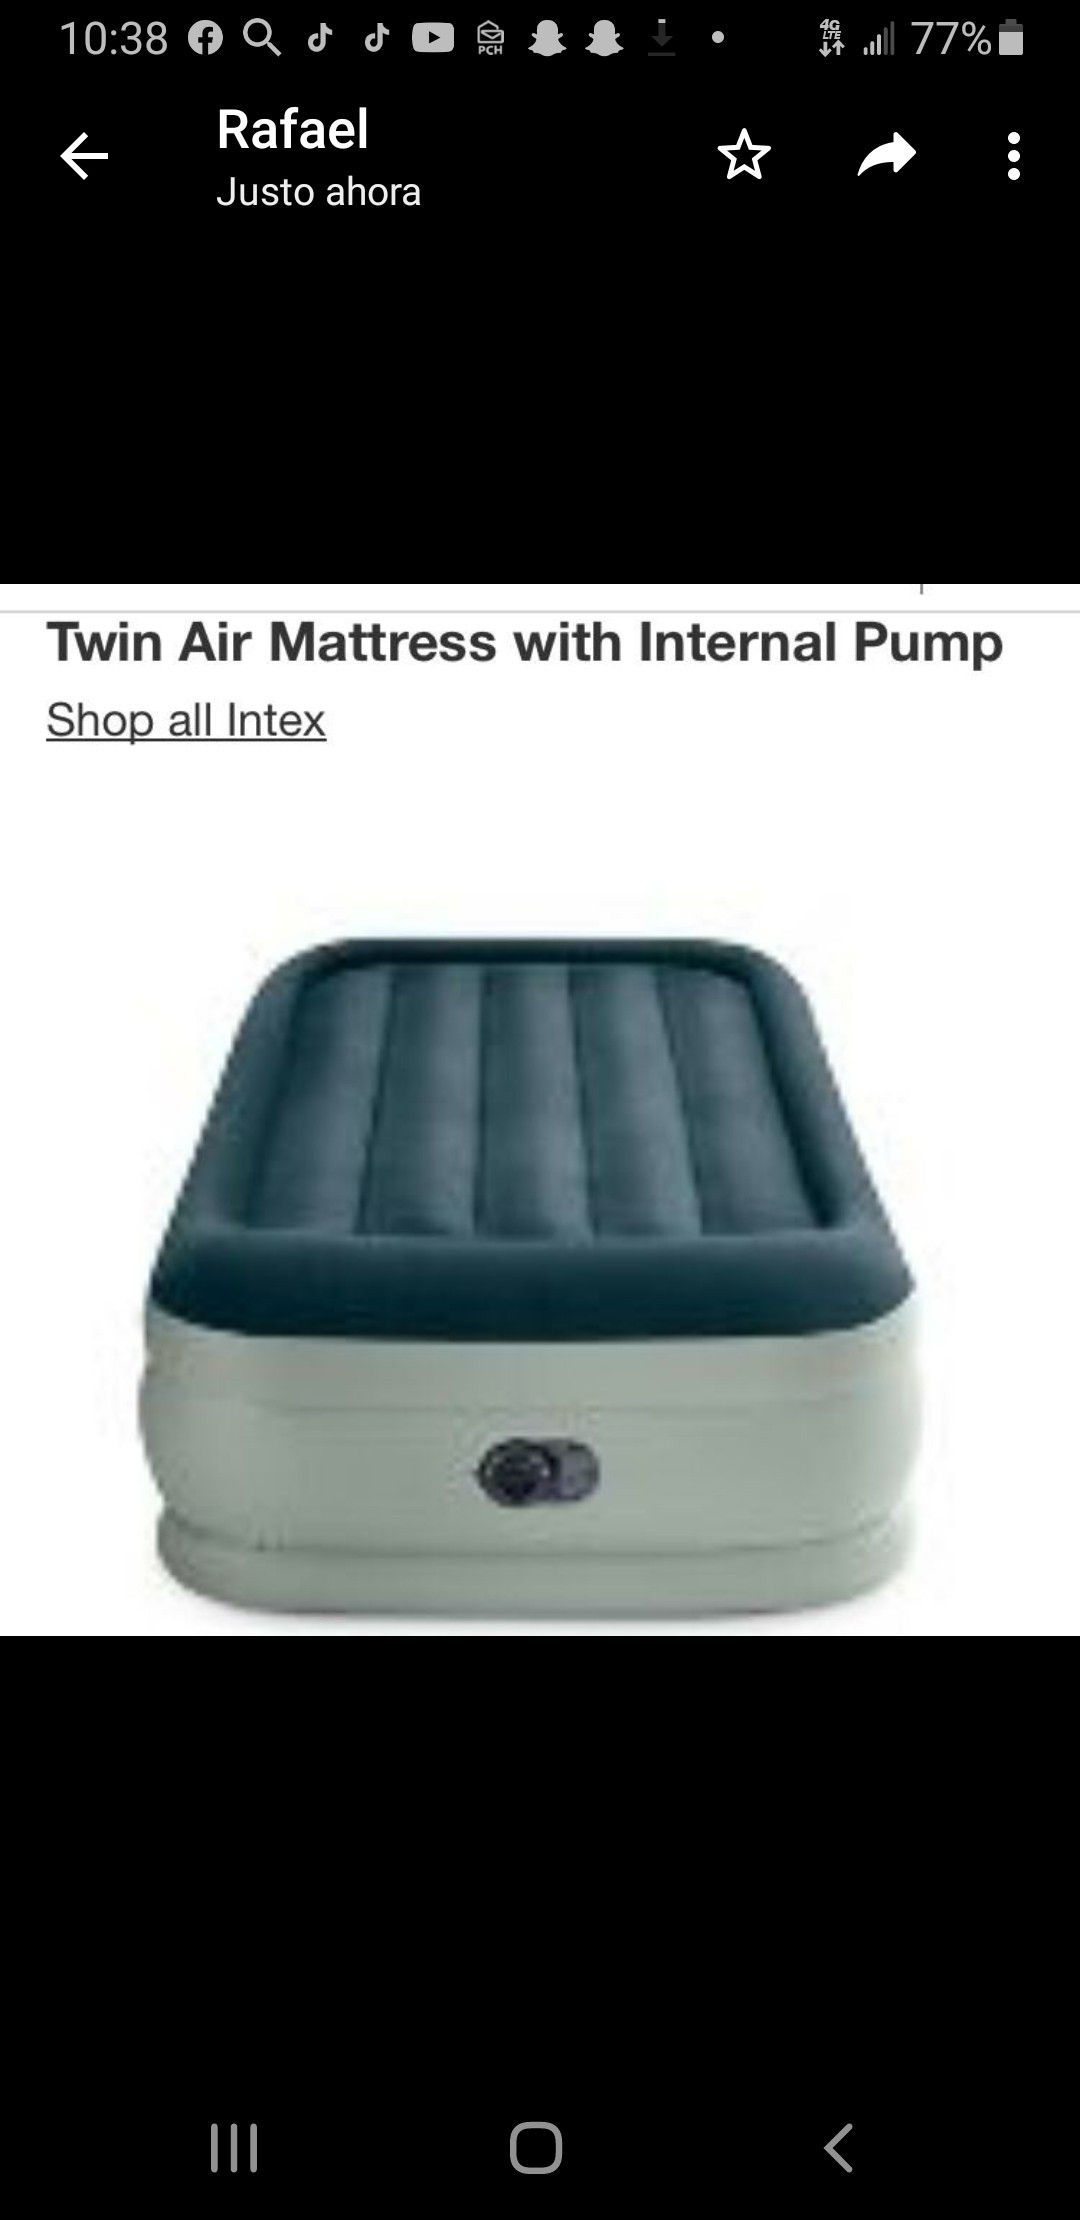 Intex Elevated 18" Premium Comfort Twin Air Mattress with Internal Pump Shop all Intex